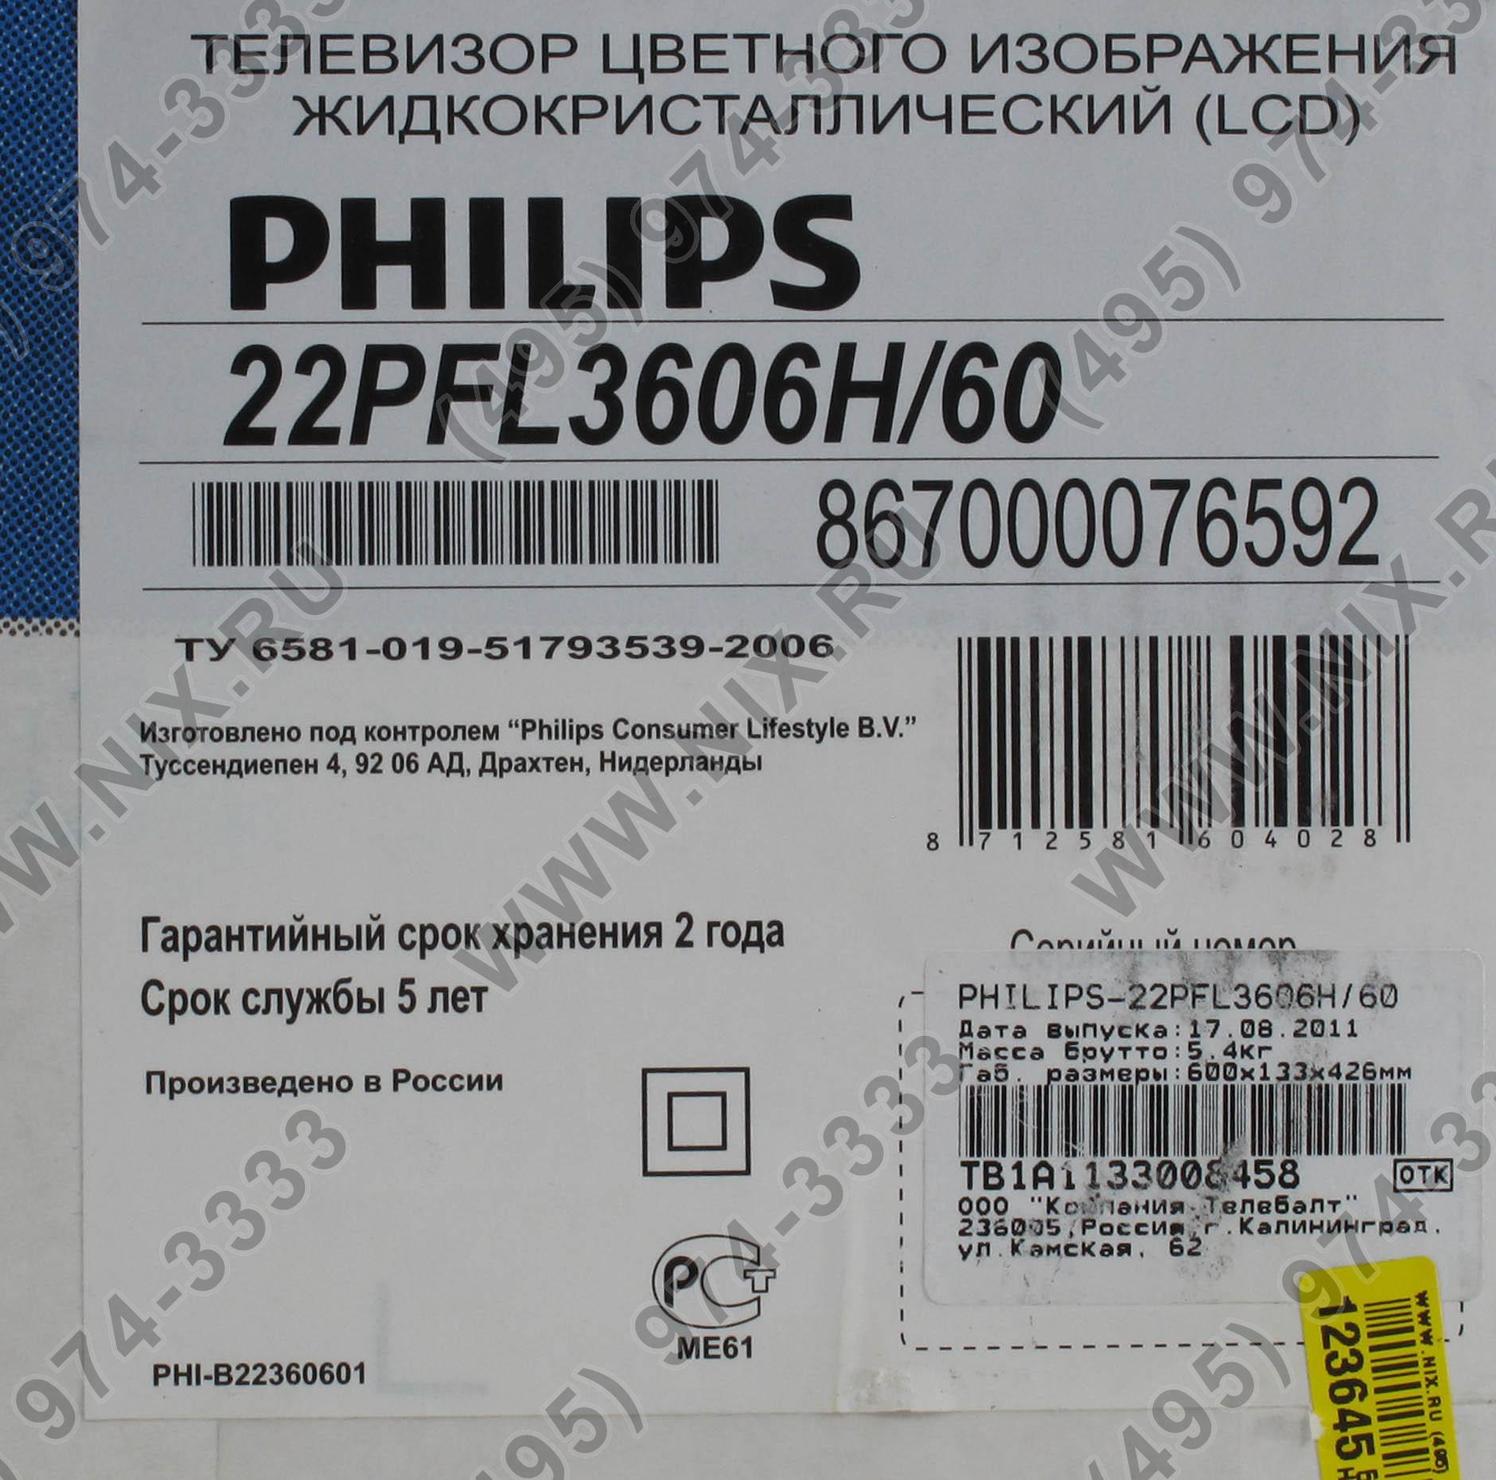 Филипс телевизор нет изображения. Телевизор Philips 22pfl3606h/60. Телевизор Philips 22pfl3606h/60 технические характеристики. Кабель питание для телевизора Philips 22pfl3606h/60. Динамики для телевизора Philips 22pfl3606h/60.